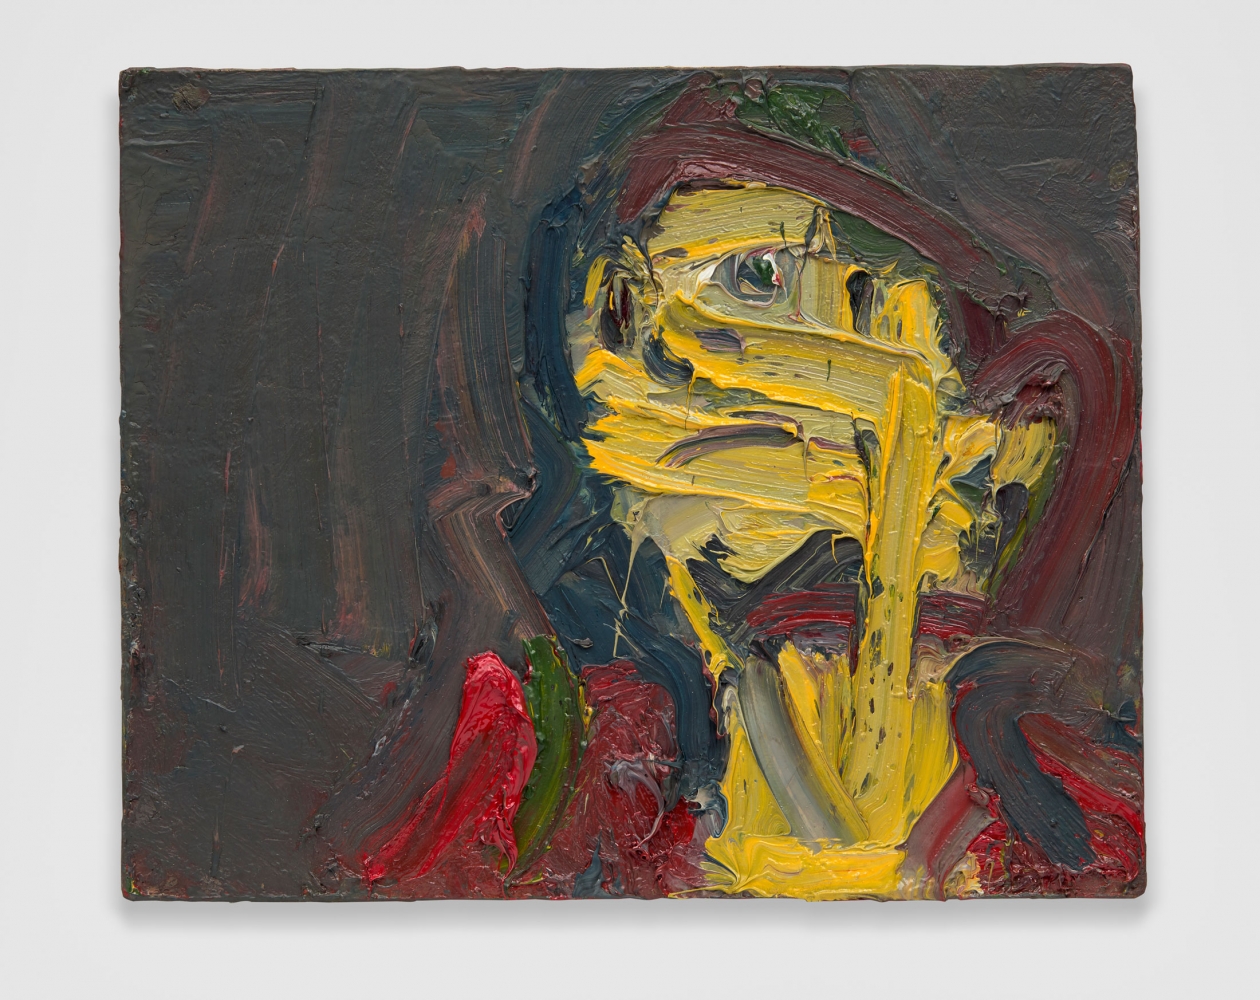 Frank Auerbach
Head of J.Y.M., 1978
Oil on board
14 5/8 x 18 inches
(37.1 x 45.7 cm)
Private collection, Topanga, CA
Courtesy of L.A. Louver, Venice, CA